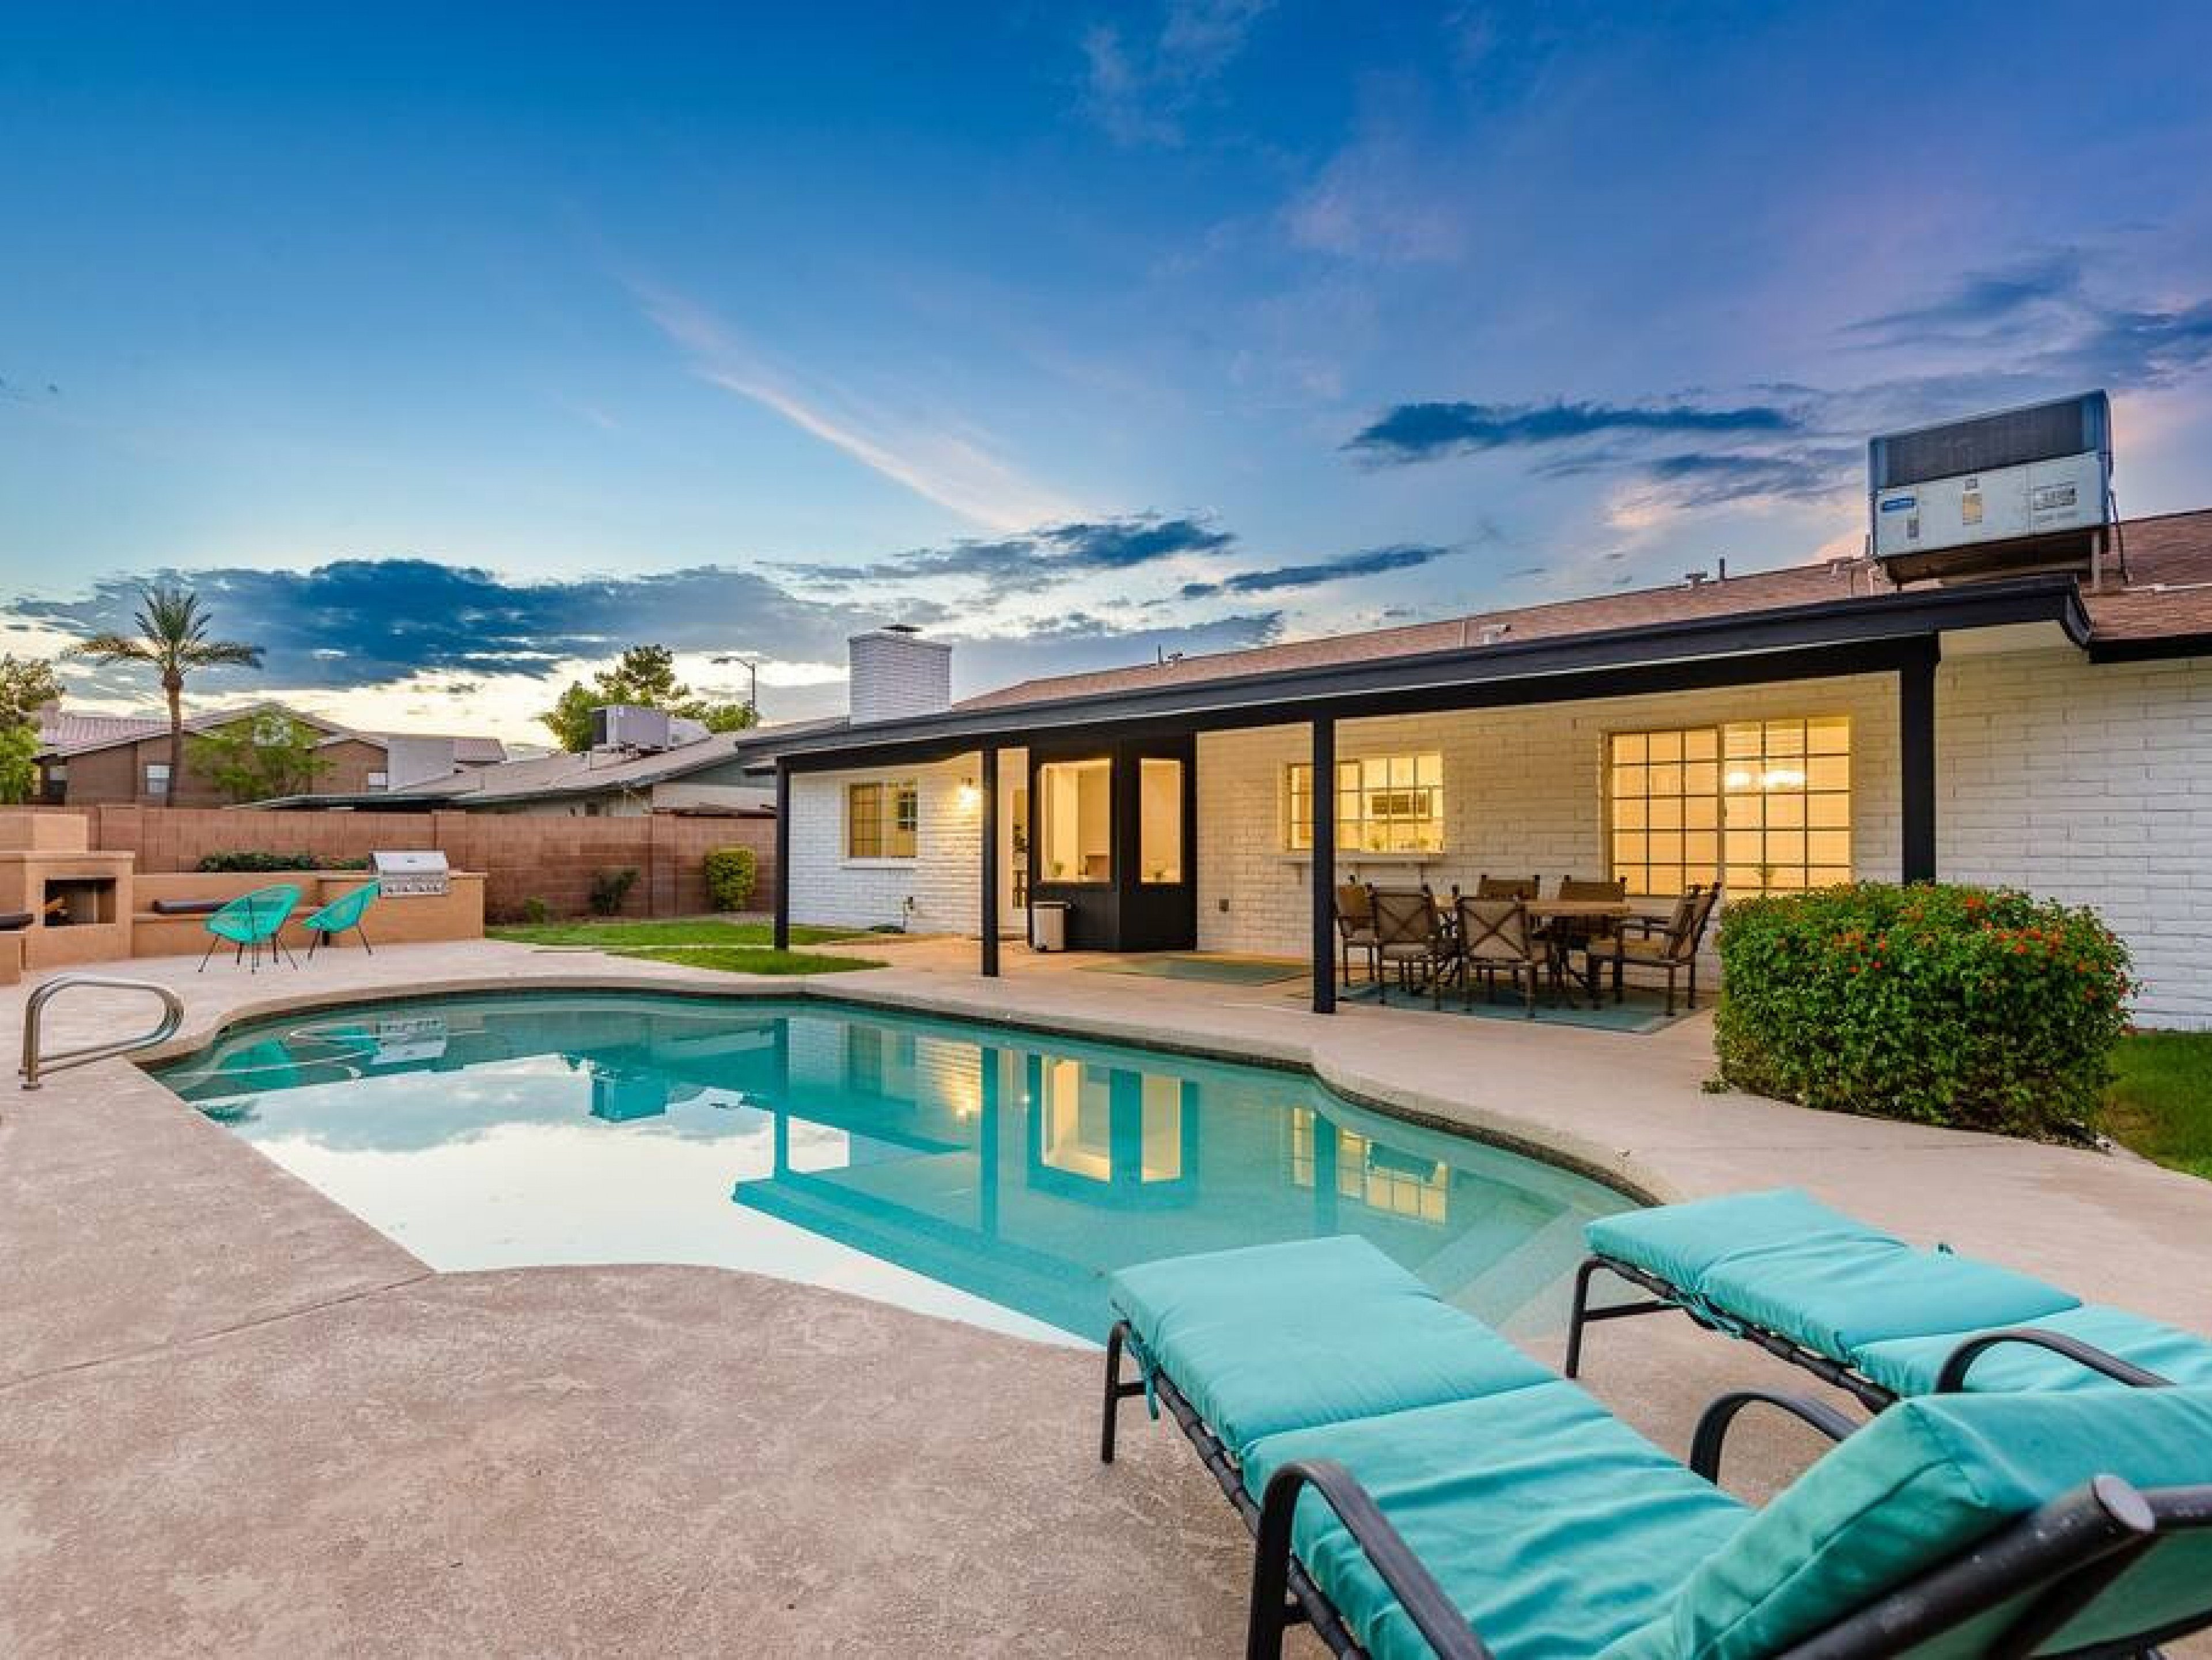 Phoenix 4 - Phoenix vacation rentals with pools  